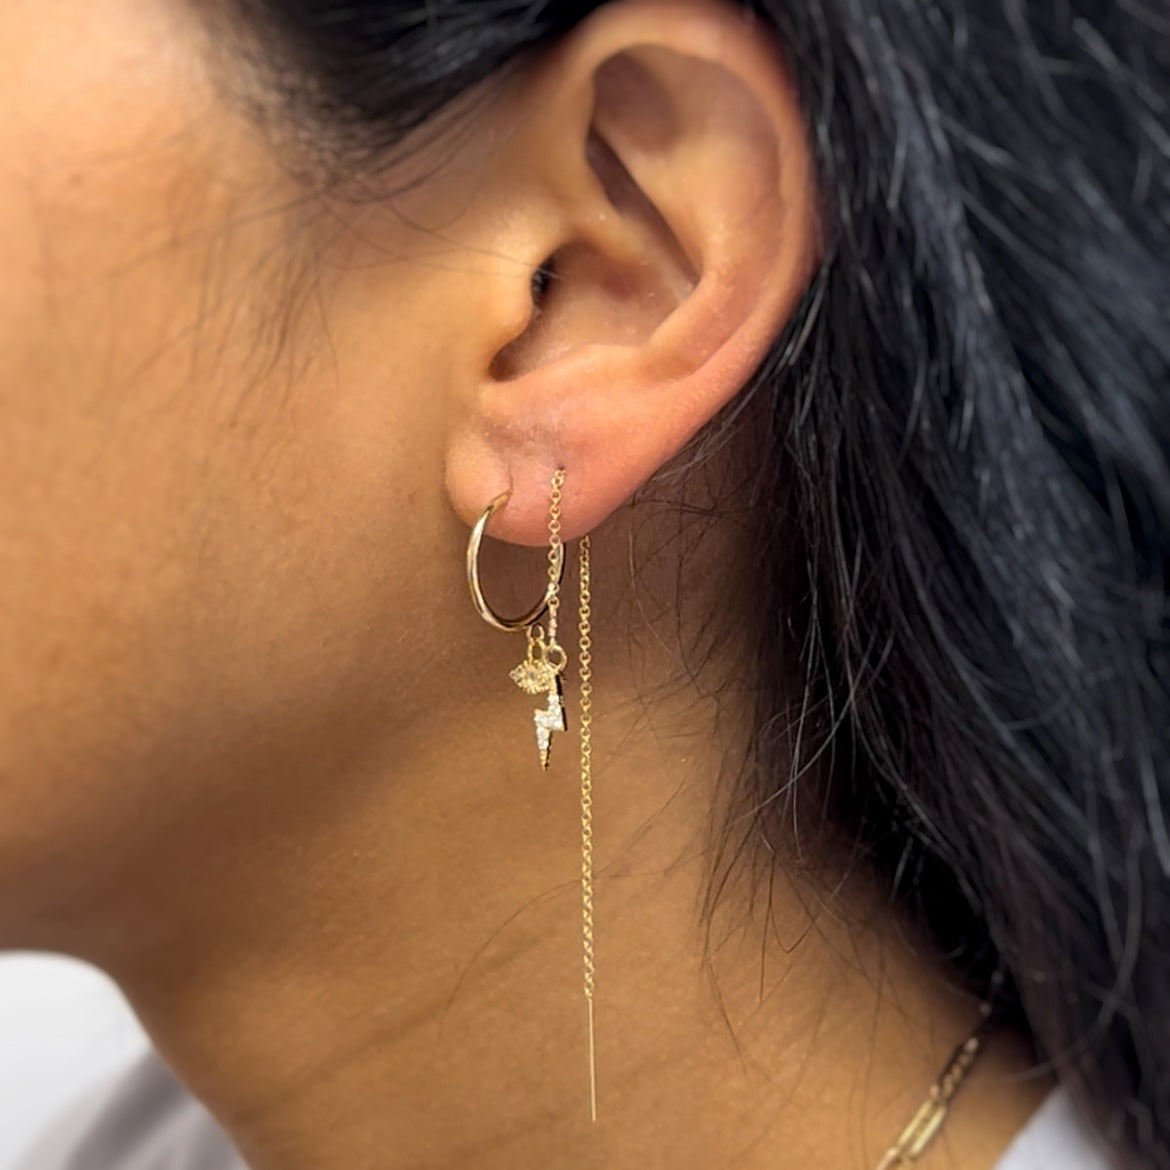 Design your own earrings